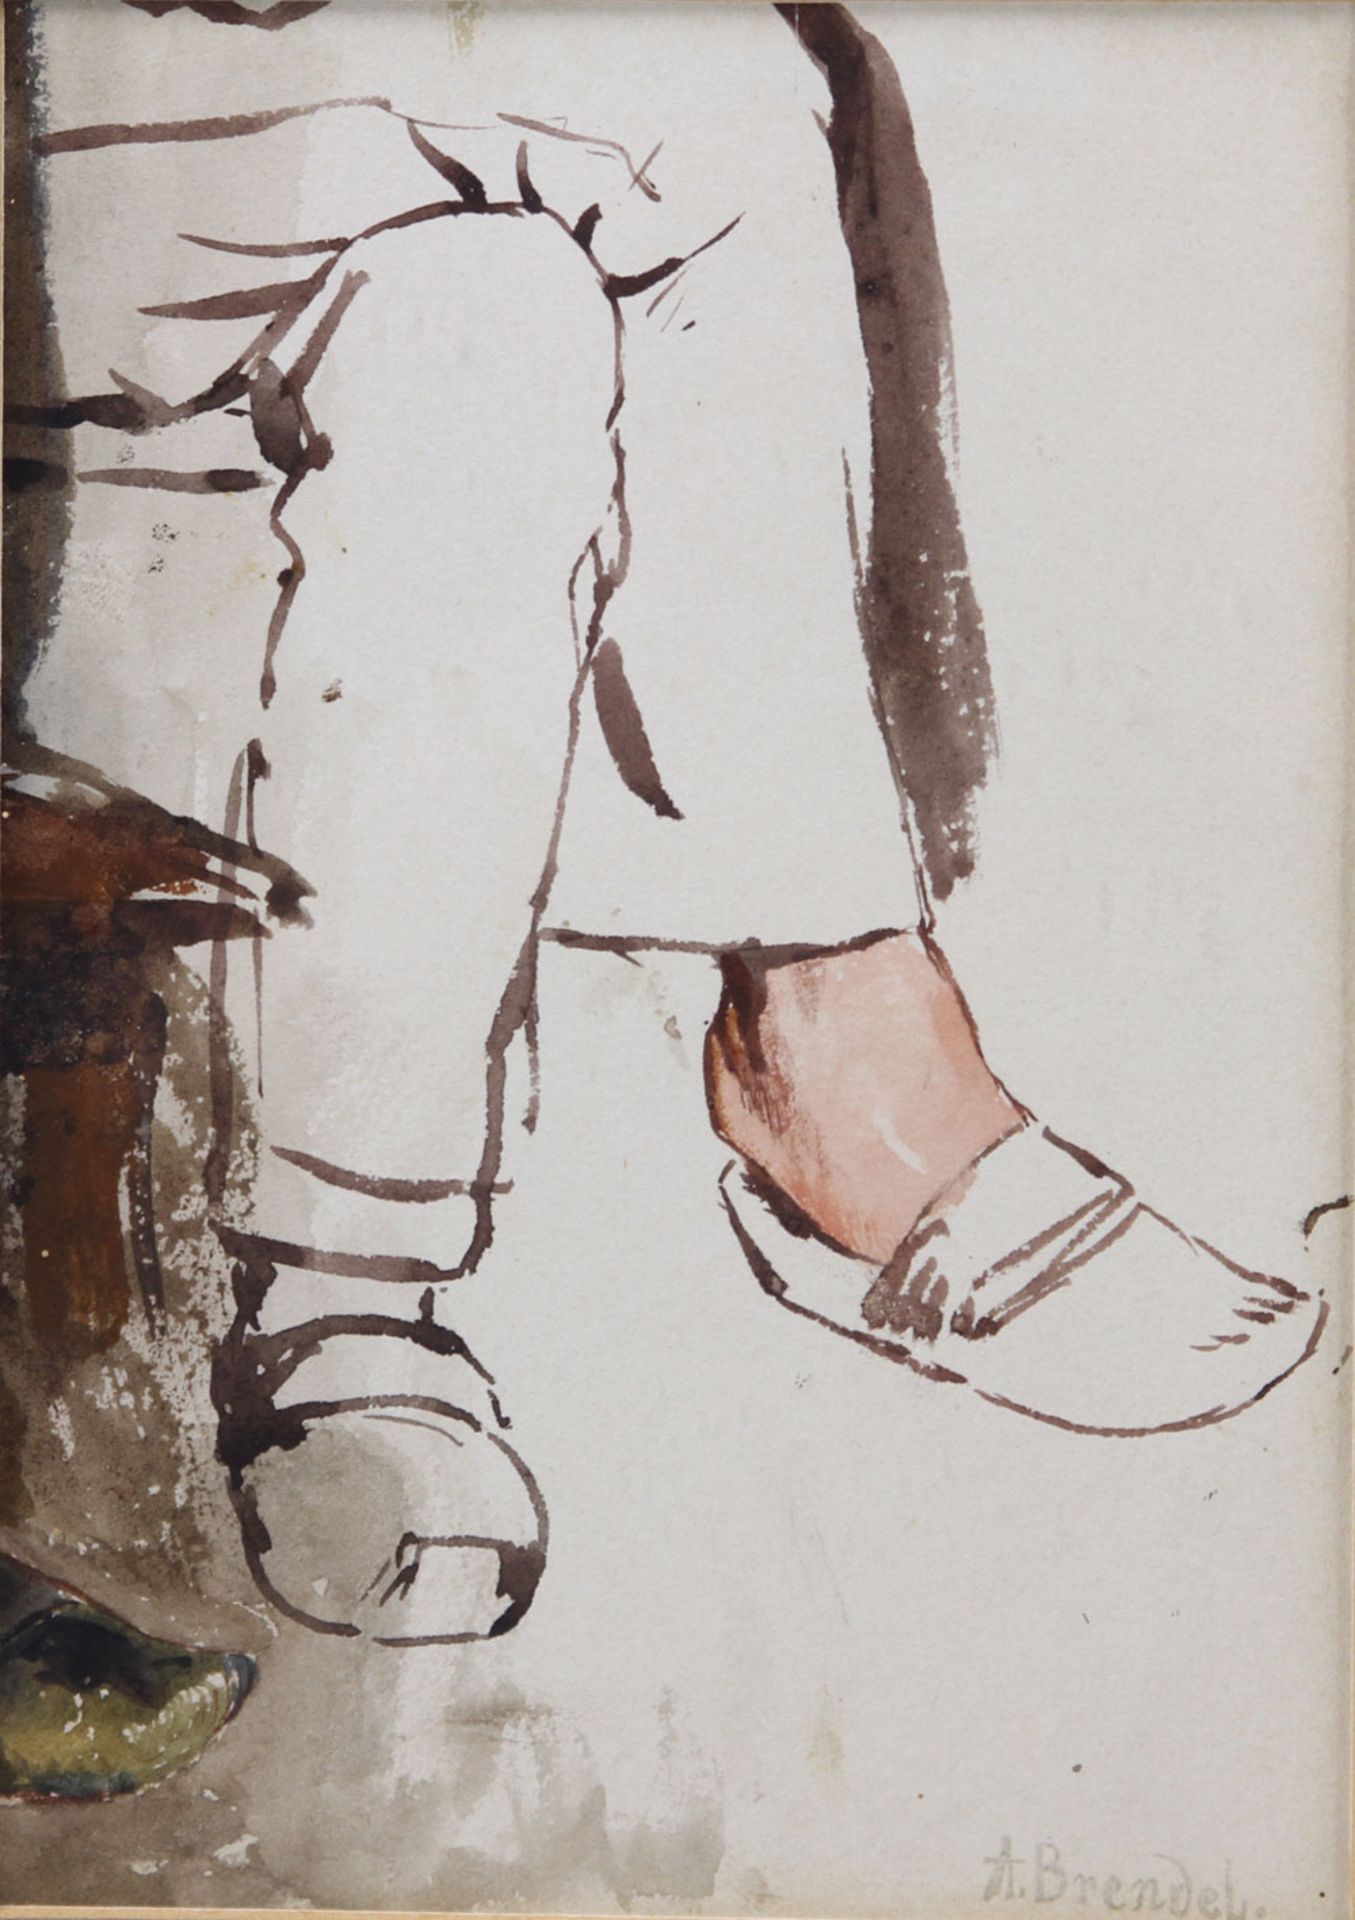 BRENDEL, ALBERT HEINRICH (1827-1895): Studie eines Beinpaars in Holzschuhen. Aquarell/Papier (